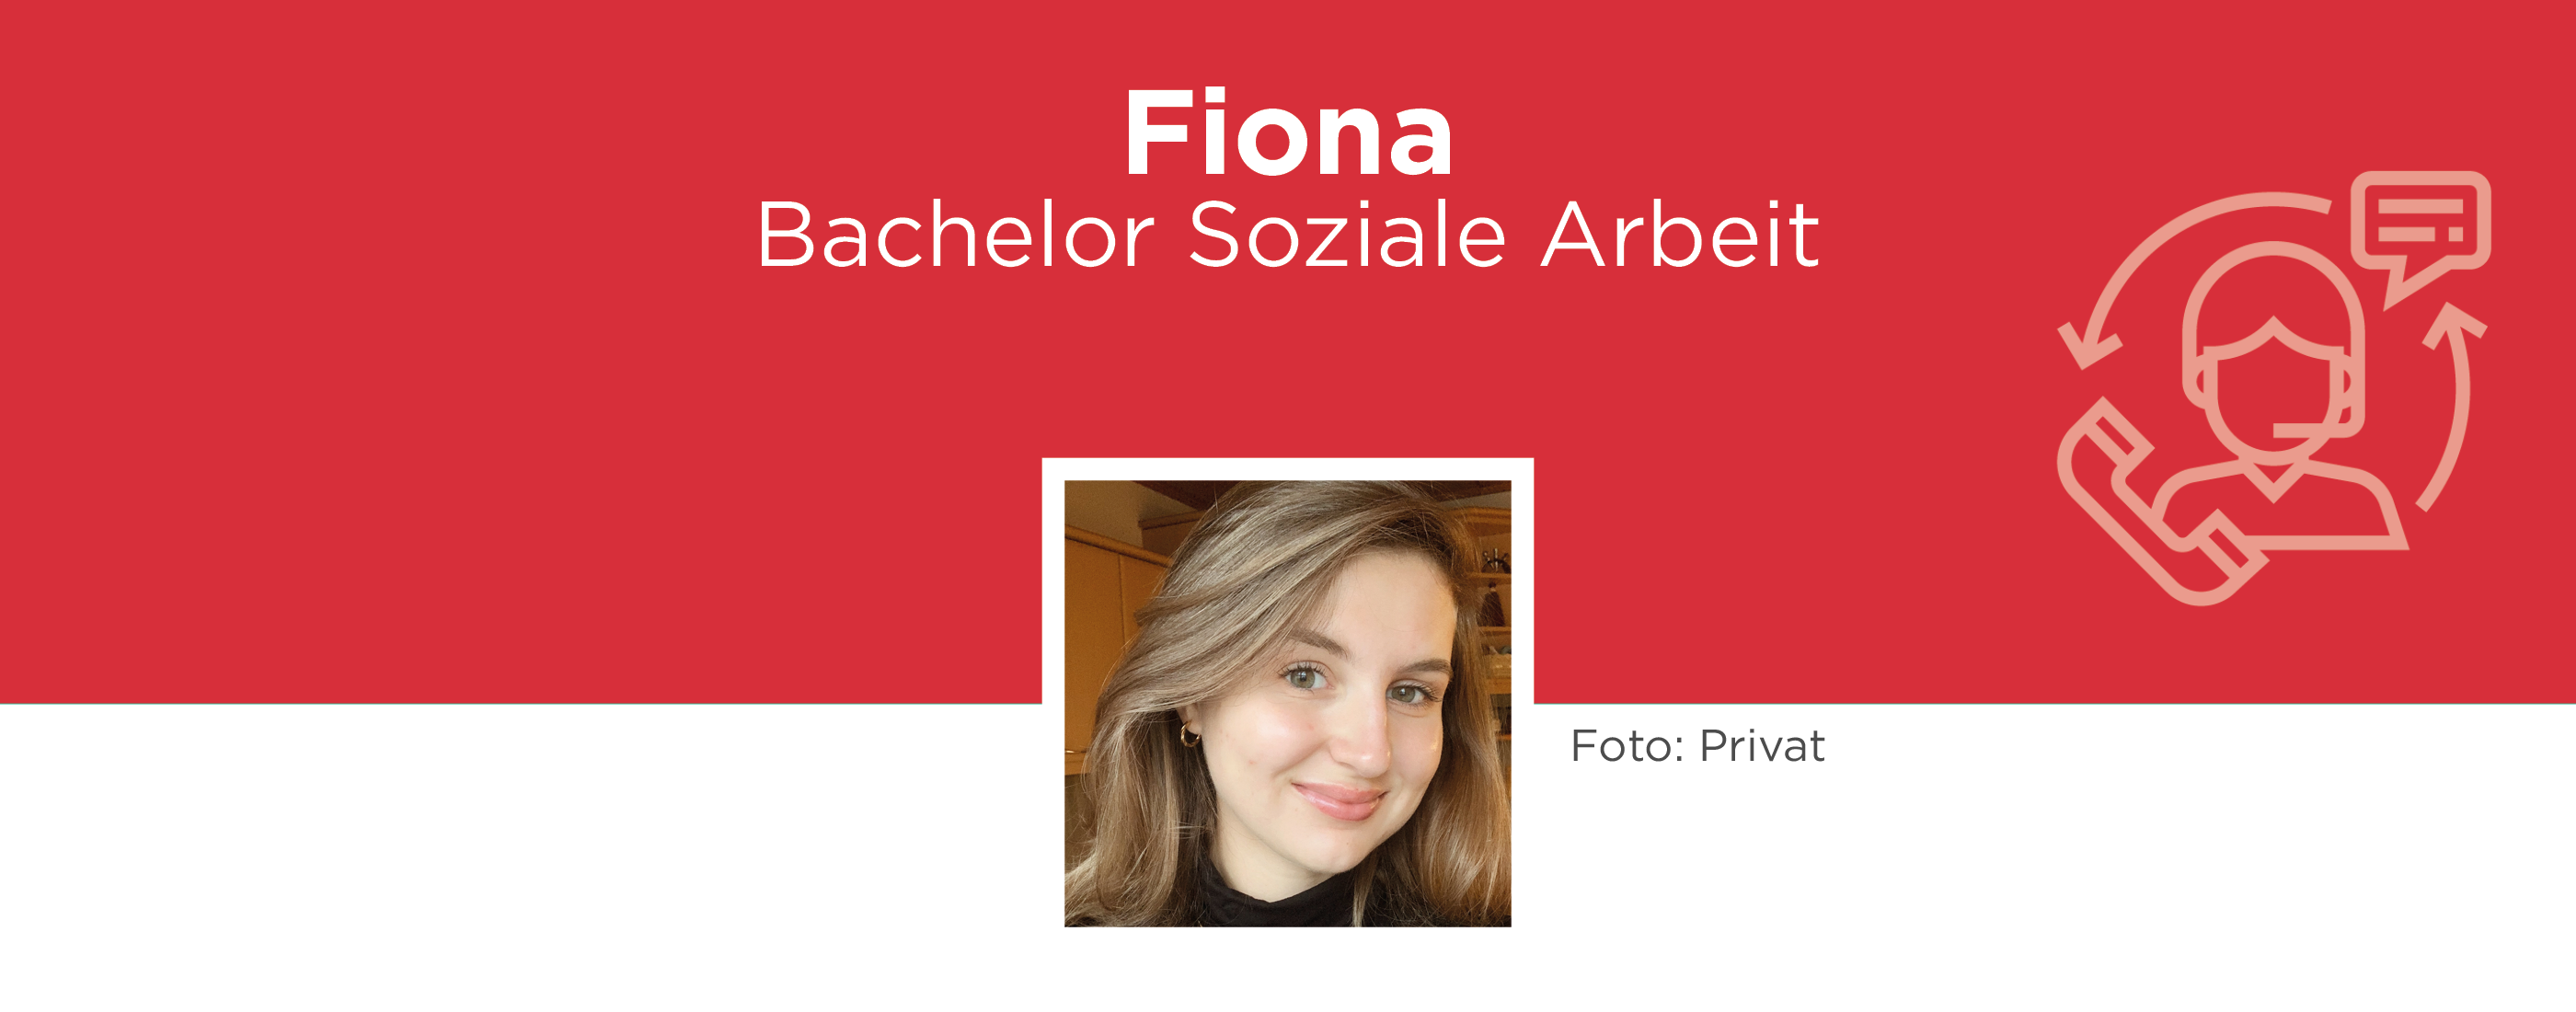 Fiona: Bachelor Soziale Arbeit